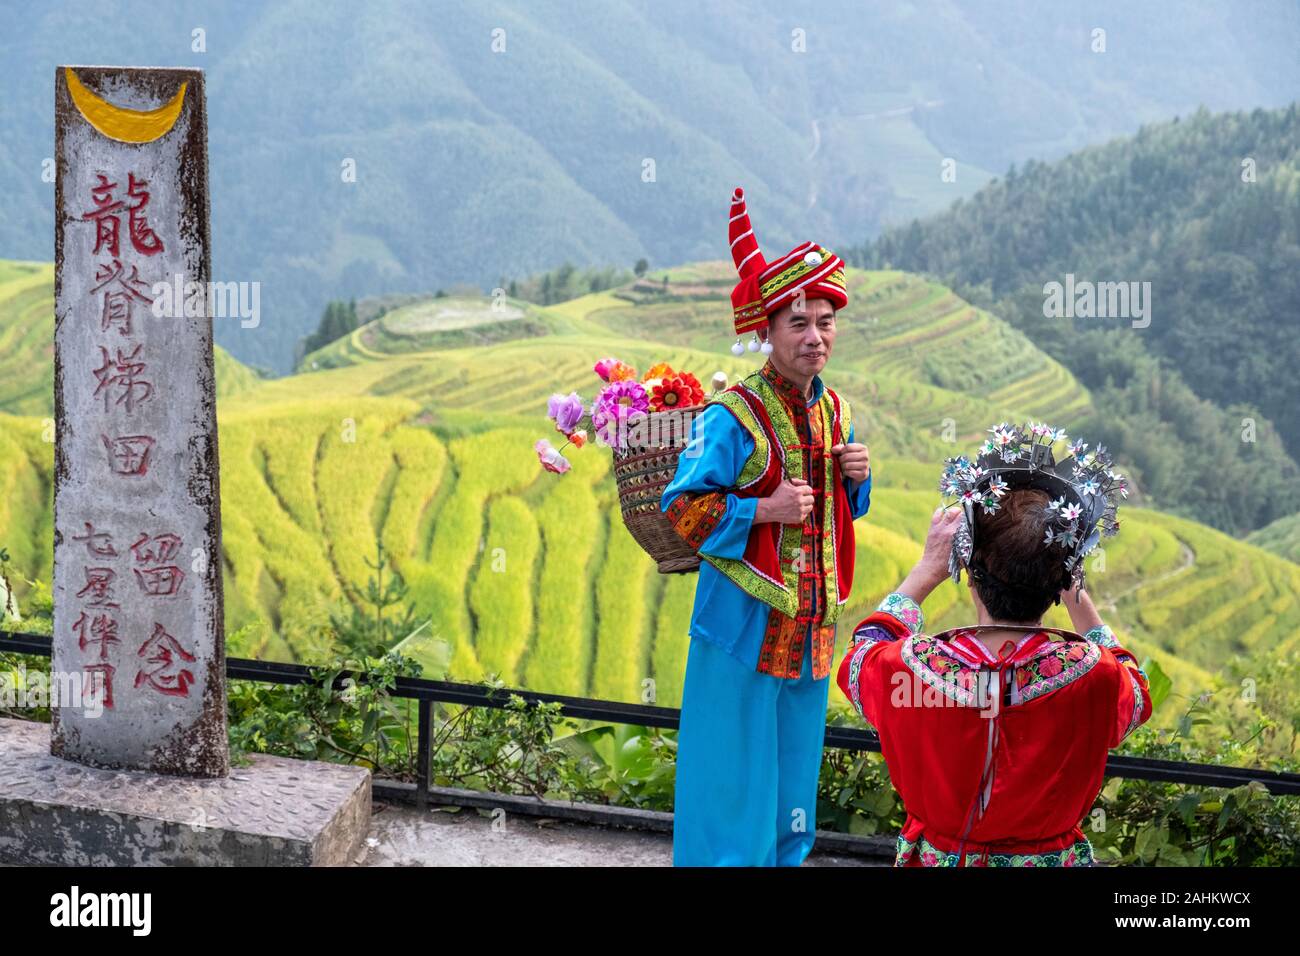 Chinese tourists wear National costumes at the Longji Rice terraces, Guangxi, China Stock Photo